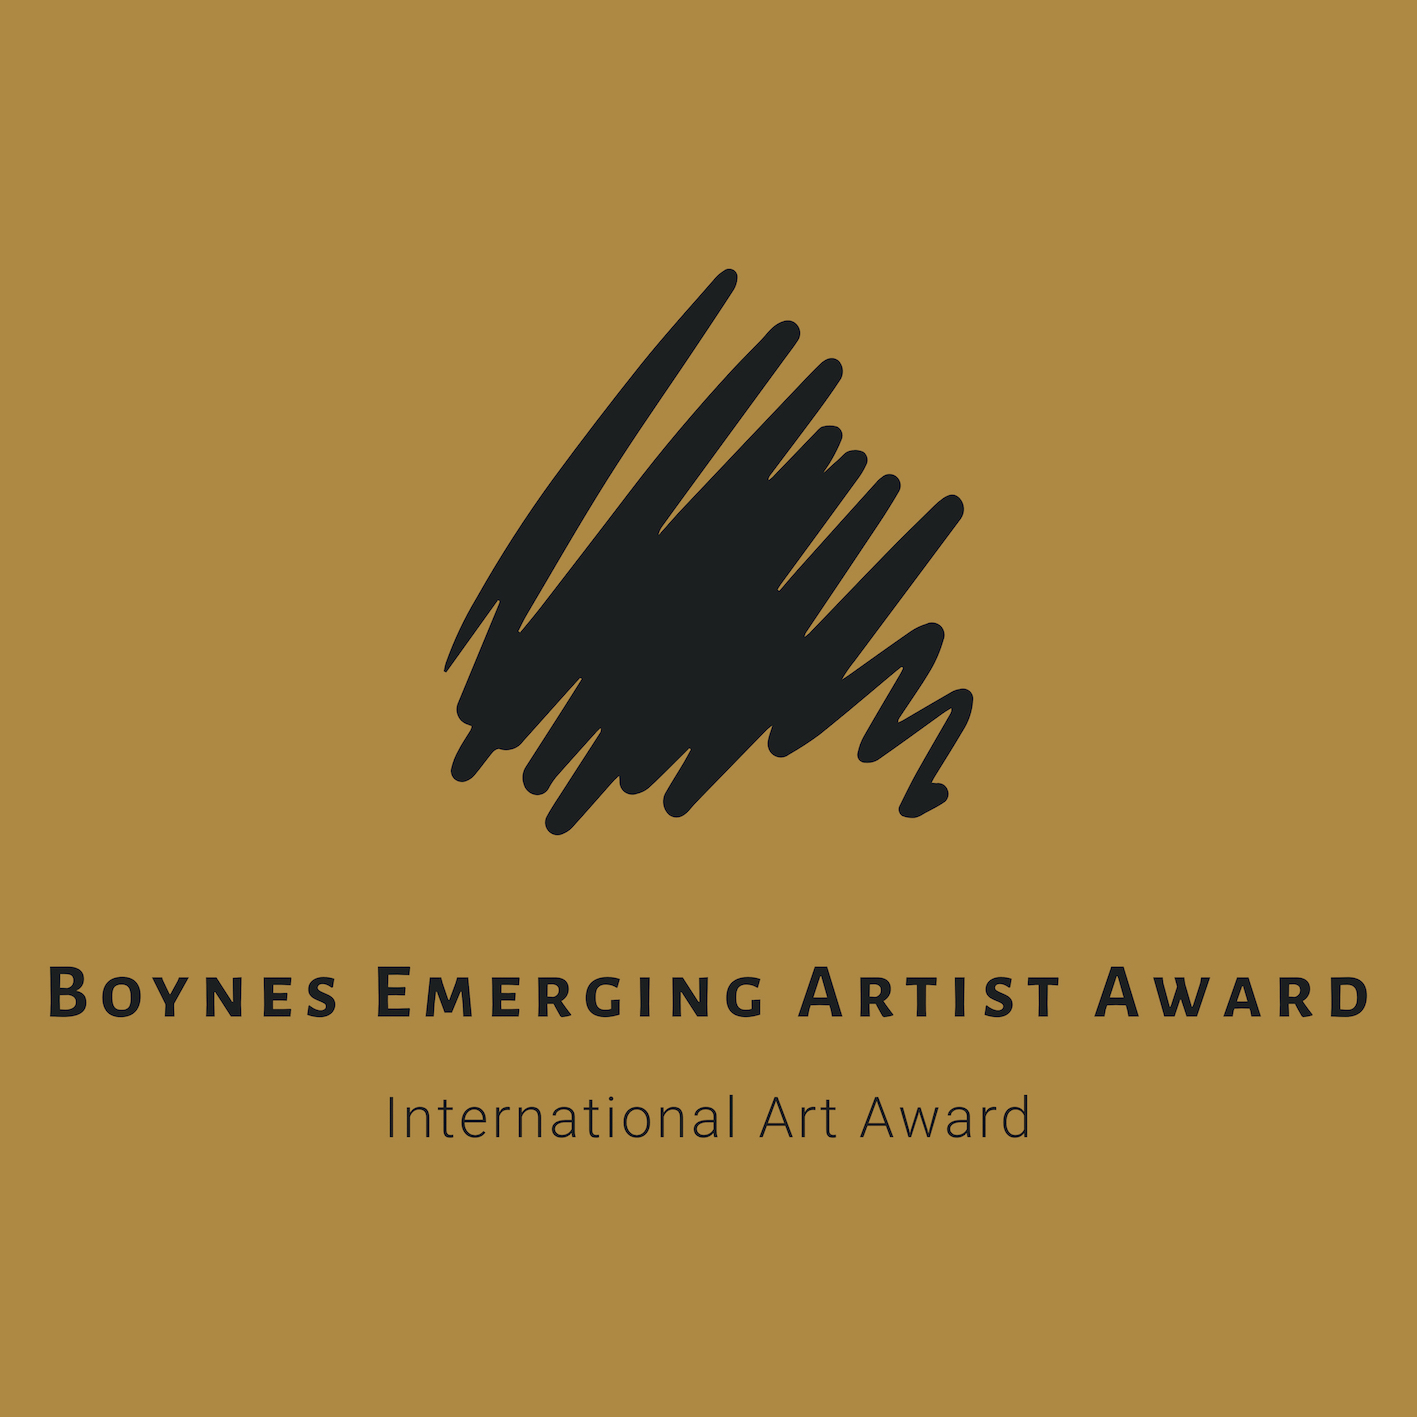 Boynes Emerging Artist Award logo - a scribble, with the wordmark Boynes Emerging Artist Award below. The tagline, International Art Award is below that.